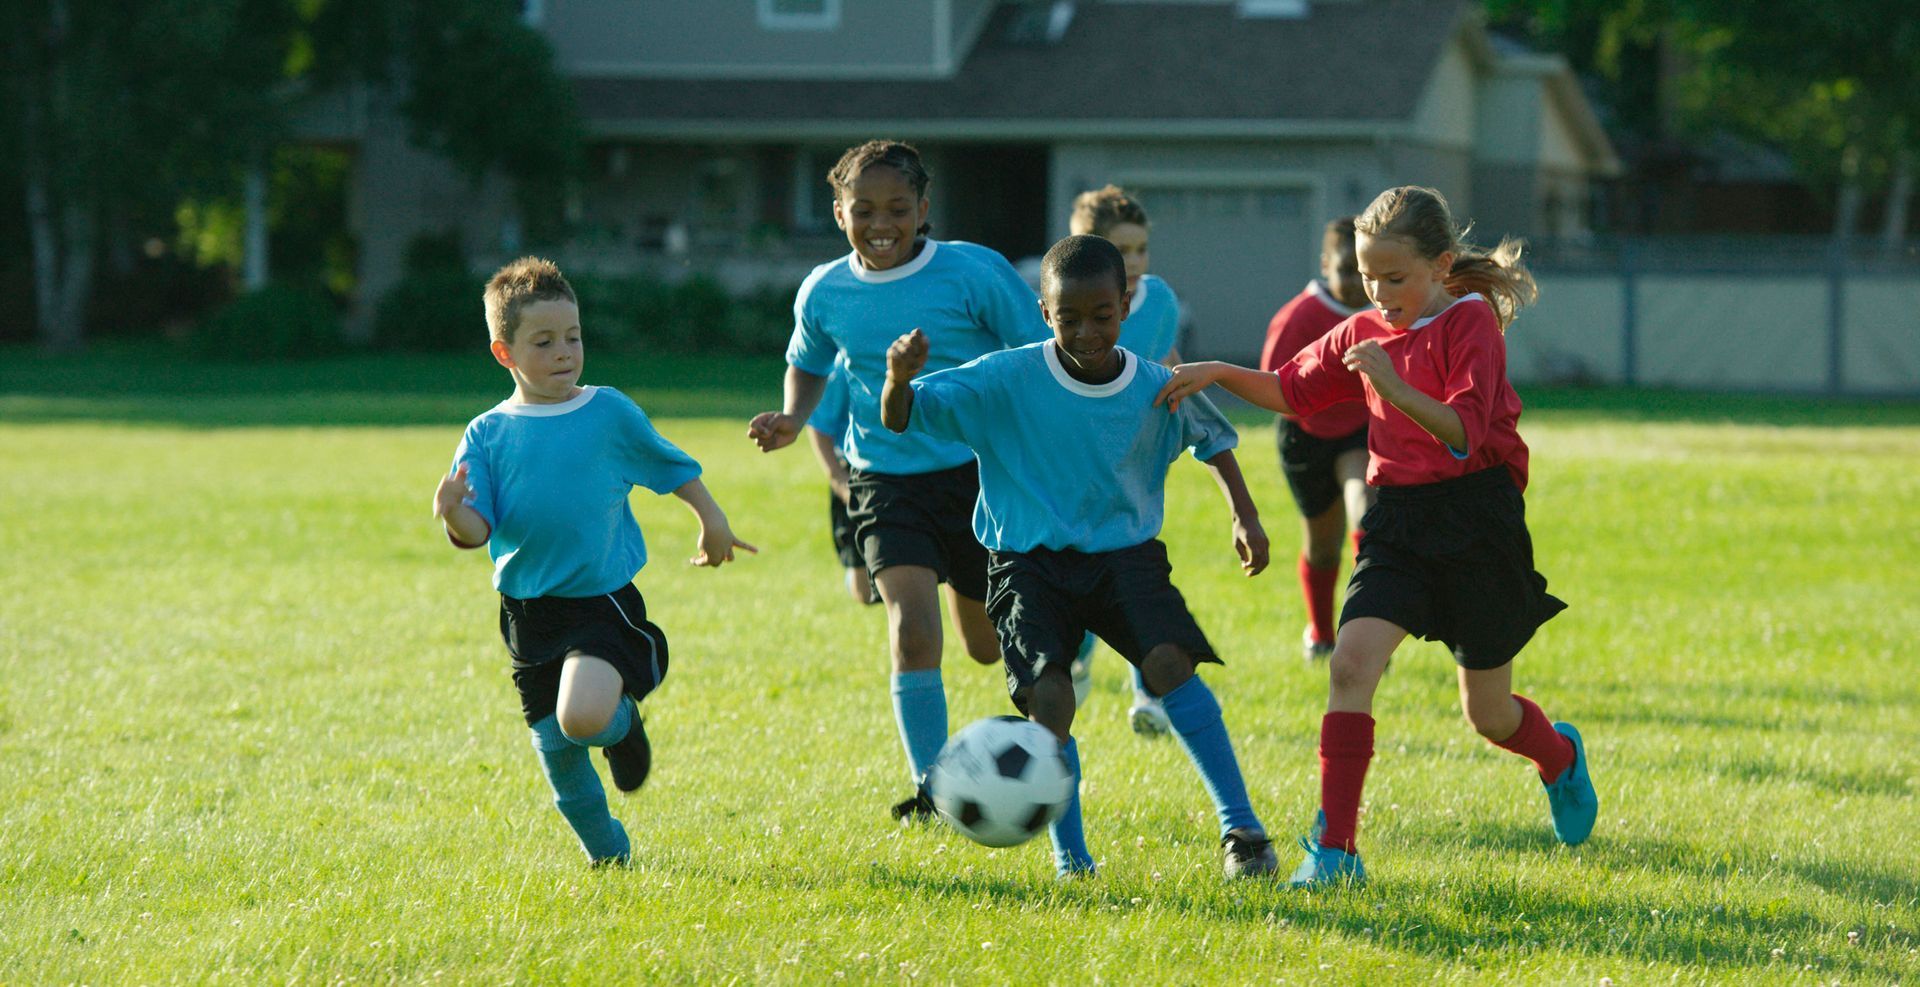 Coed Youth Soccer Running Field | Sarasota, FL | Suncoast Sports